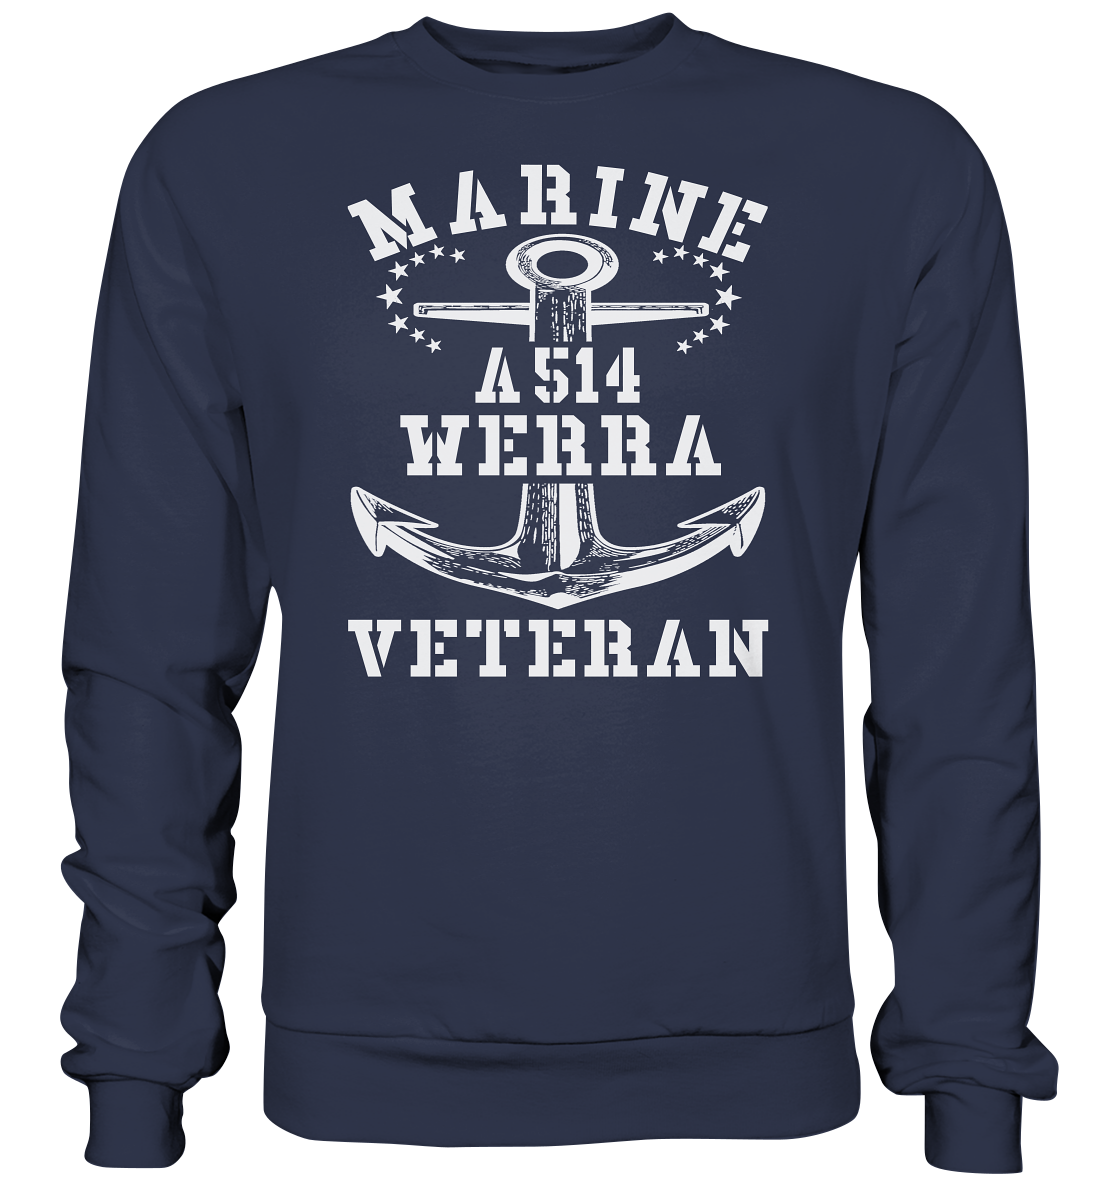 Tender A514 WERRA Marine Veteran - Premium Sweatshirt